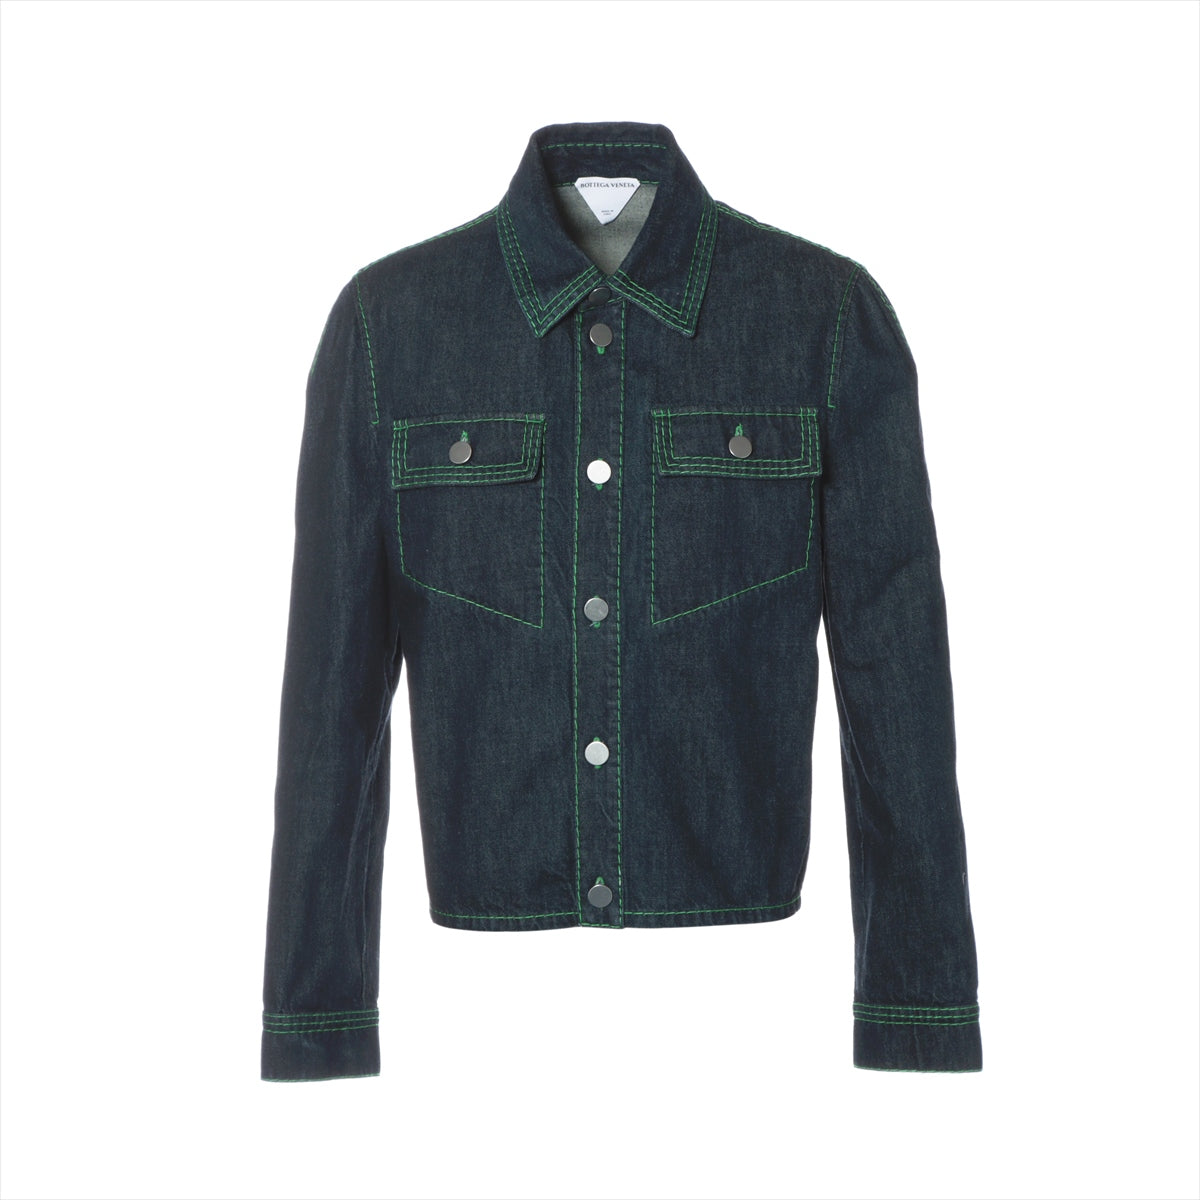 Bottega Veneta 21 years Cotton Denim jacket 52 Men's Green x navy  671063